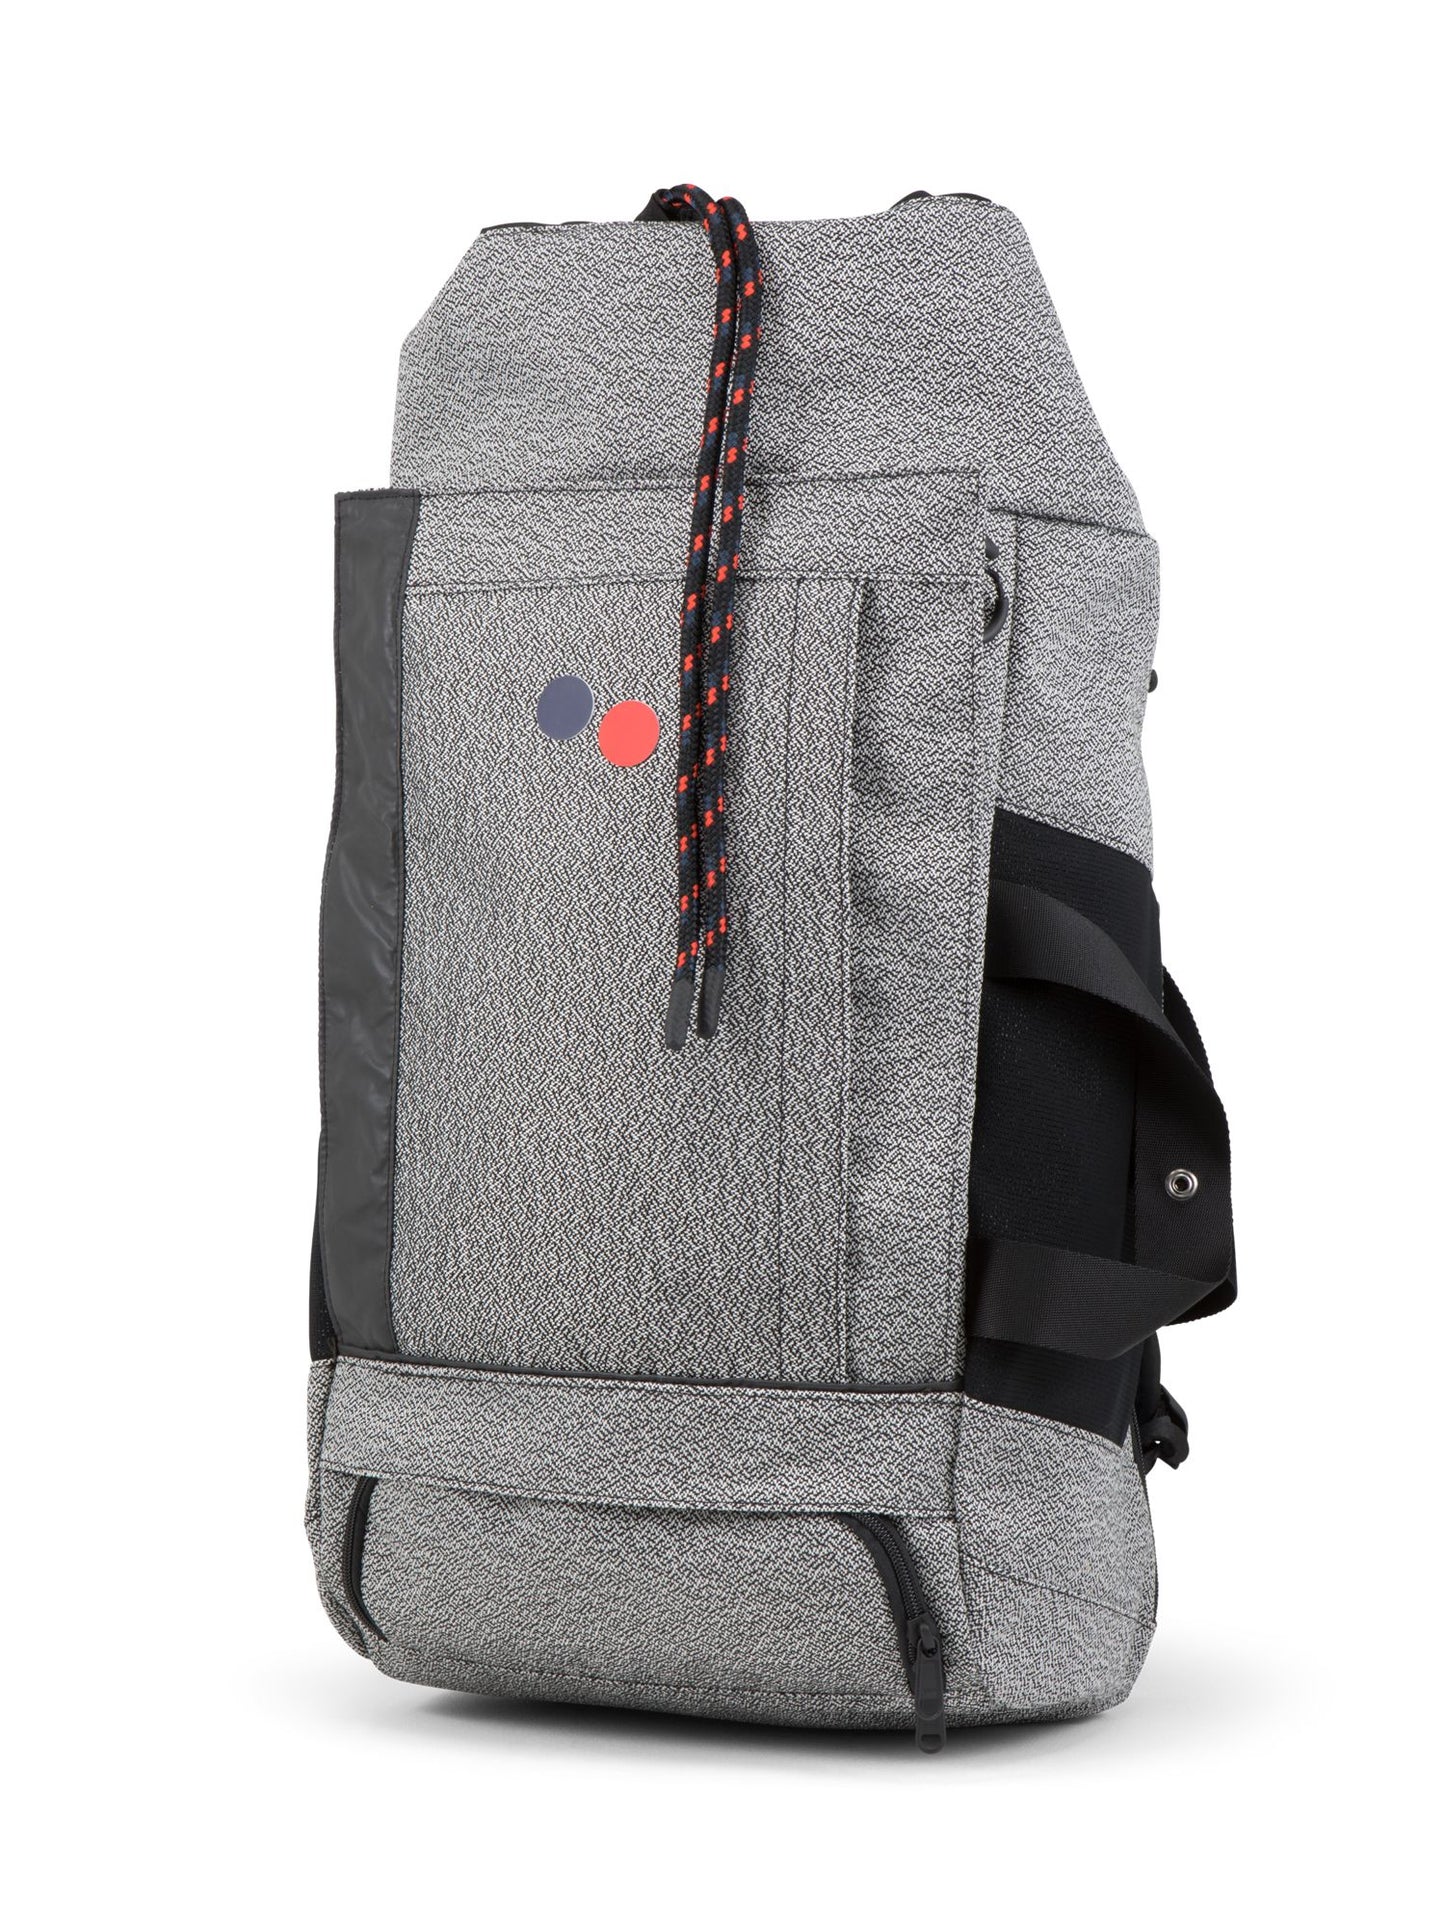 pinqponq-backpack-Blok-Large-Vivid-Monochrome-front